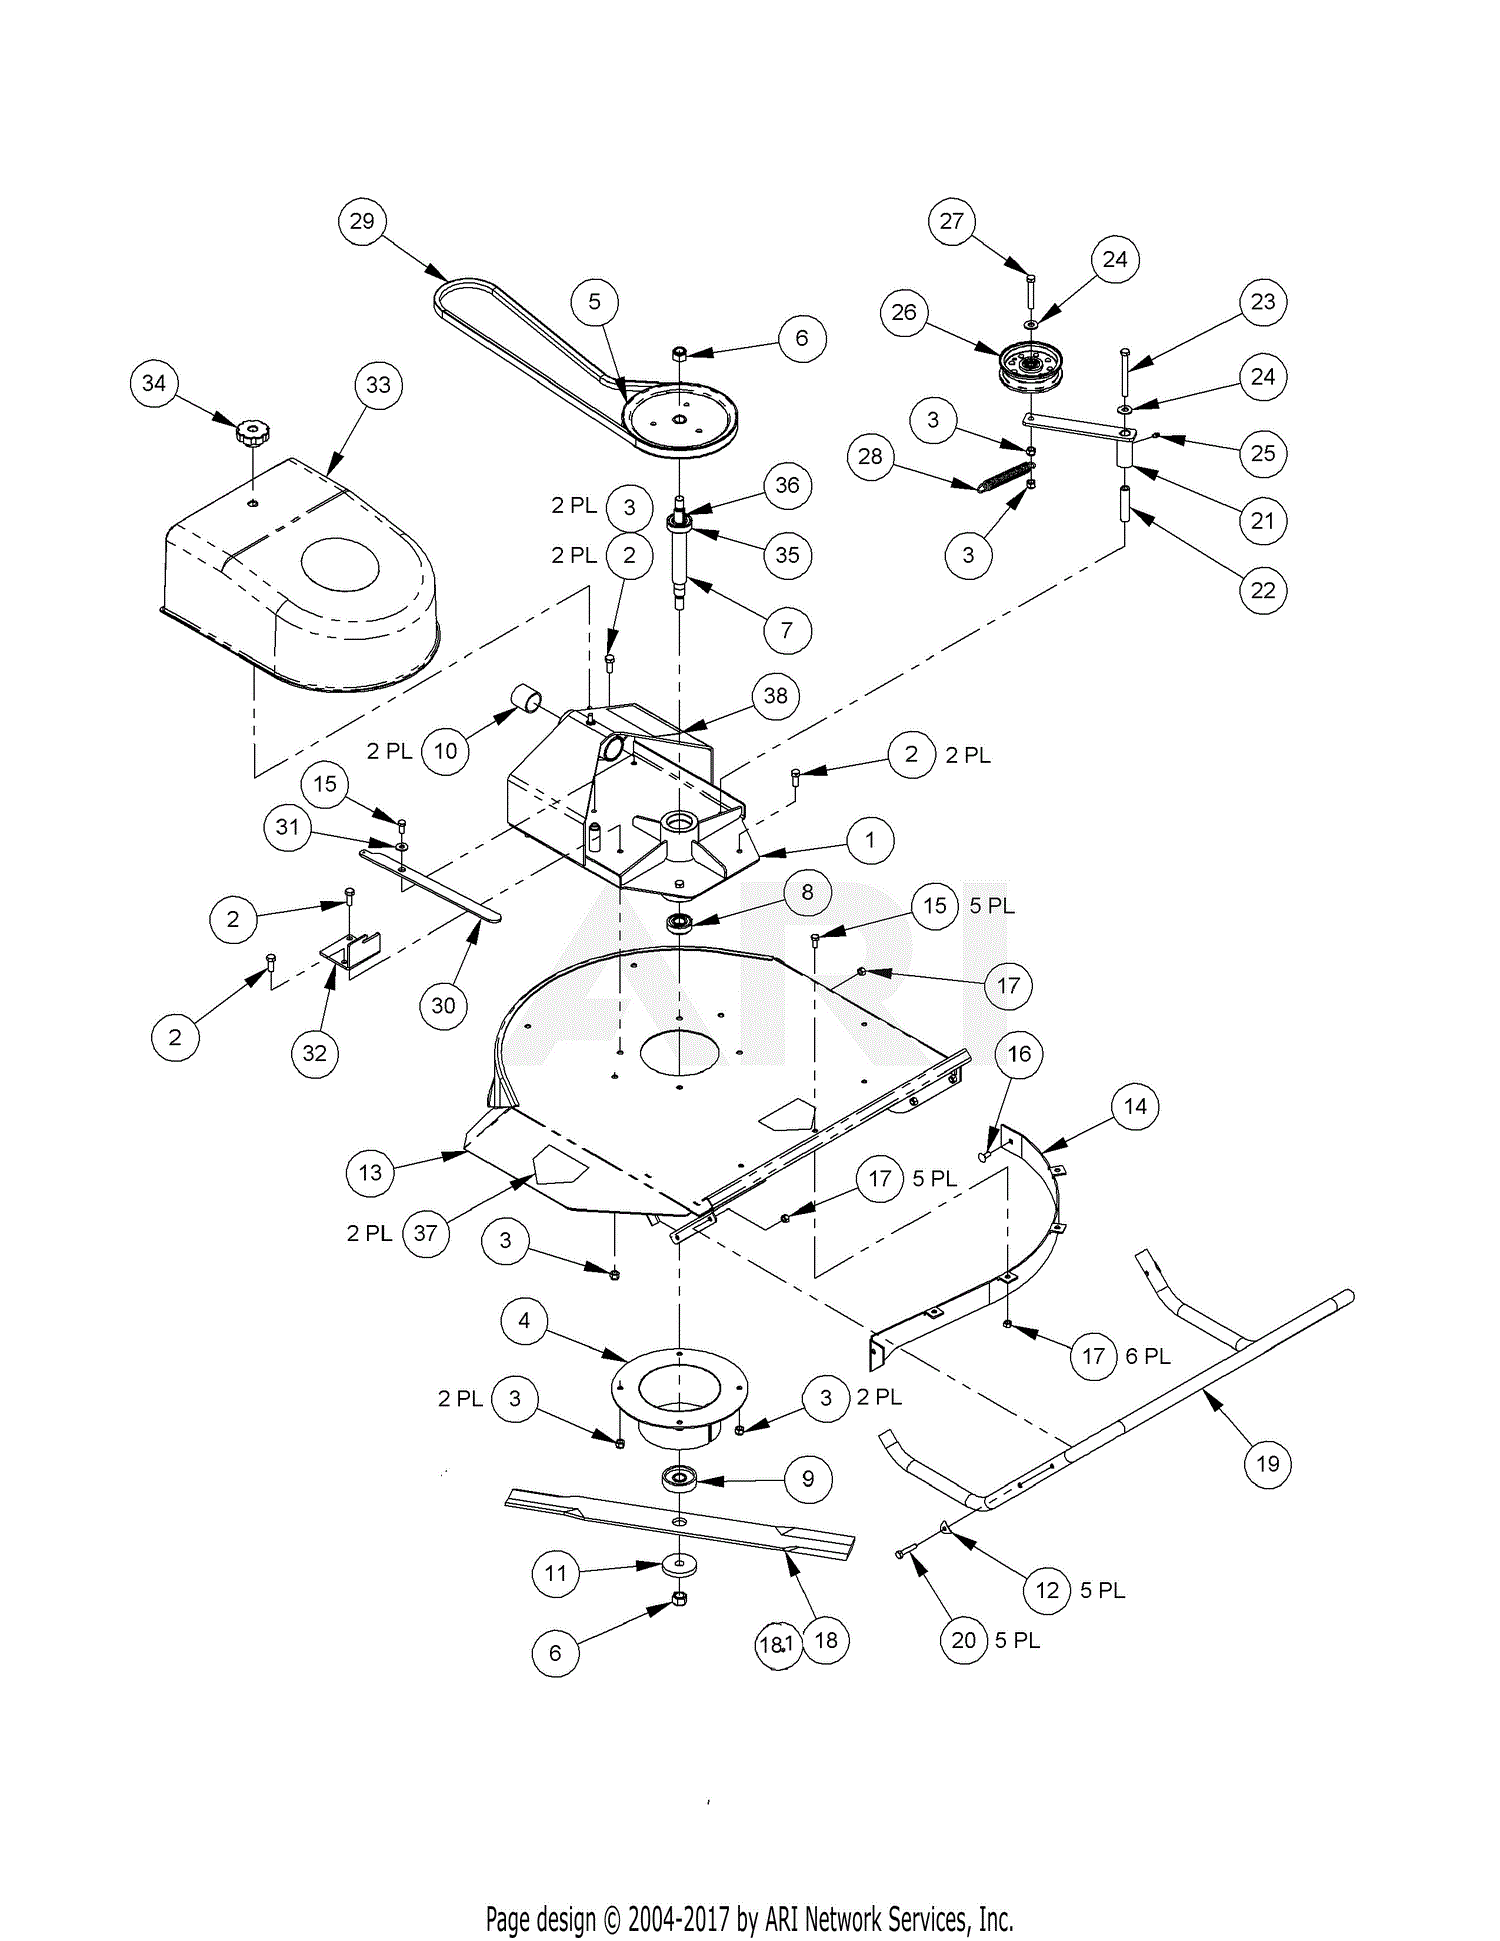 Diagram Rug Doctor Wiring Diagram Full Version Hd Quality Wiring Diagram Seemdiagram Eracleaturismo It